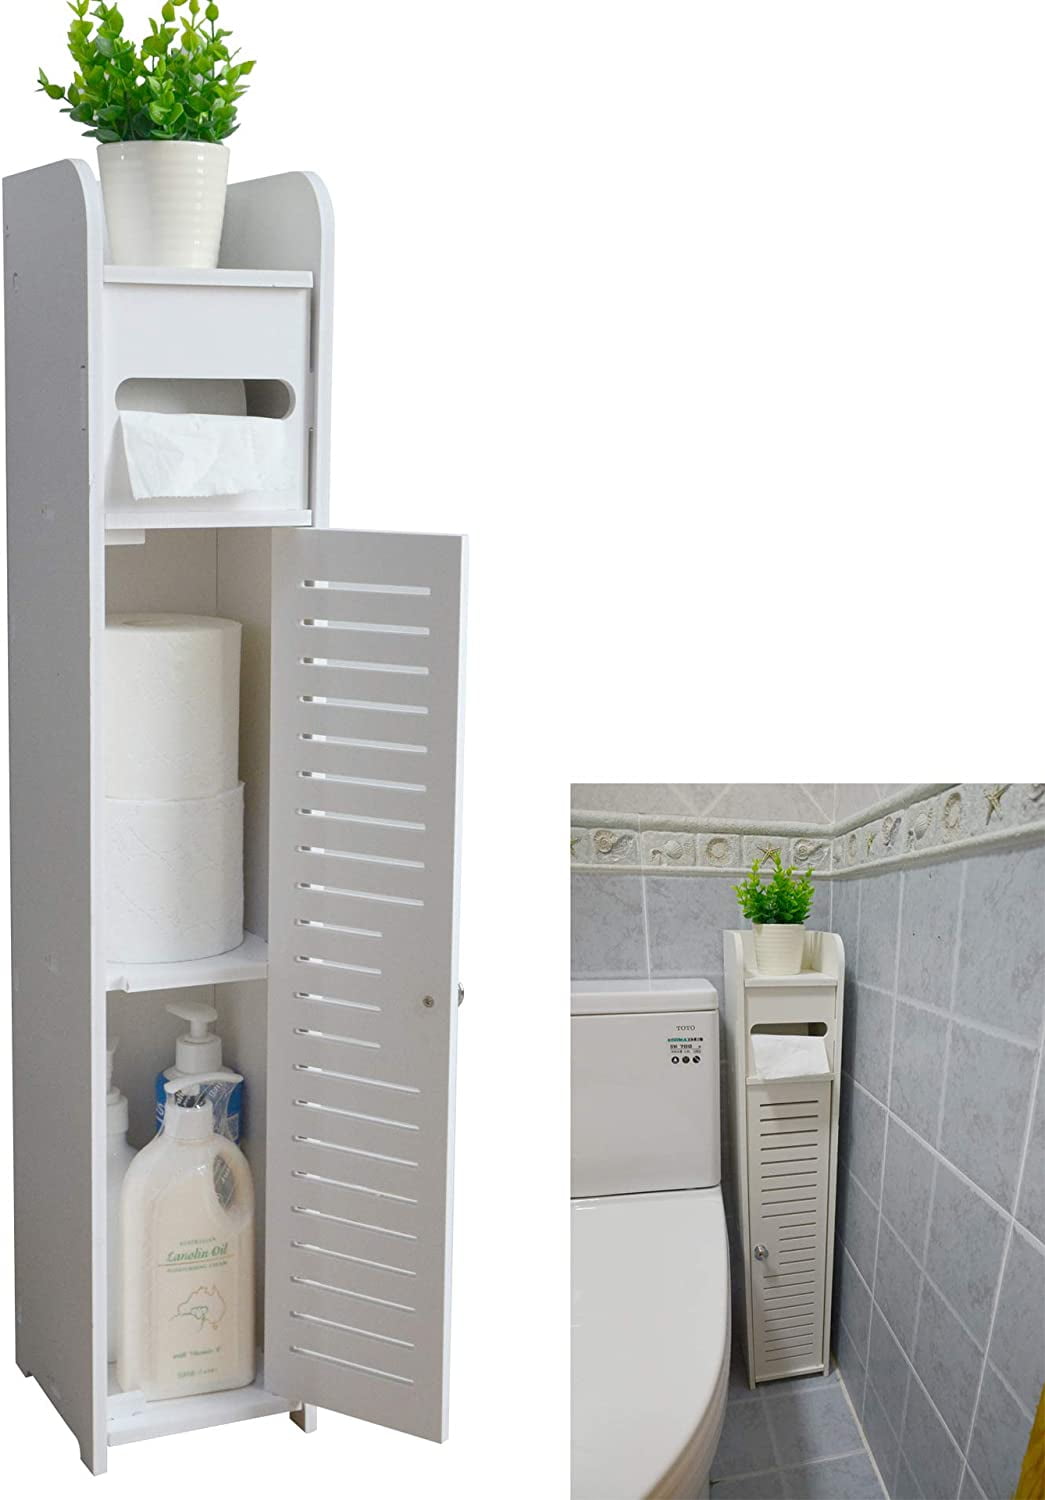 Towel Storage Shelf for Paper Holder Corner Shower Shelf Waterproof for Bathroom CHENTUO Small Bathroom Storage Corner Floor Cabinet with Doors & Shelves for Tight Space Narrow Bathroom Organizer